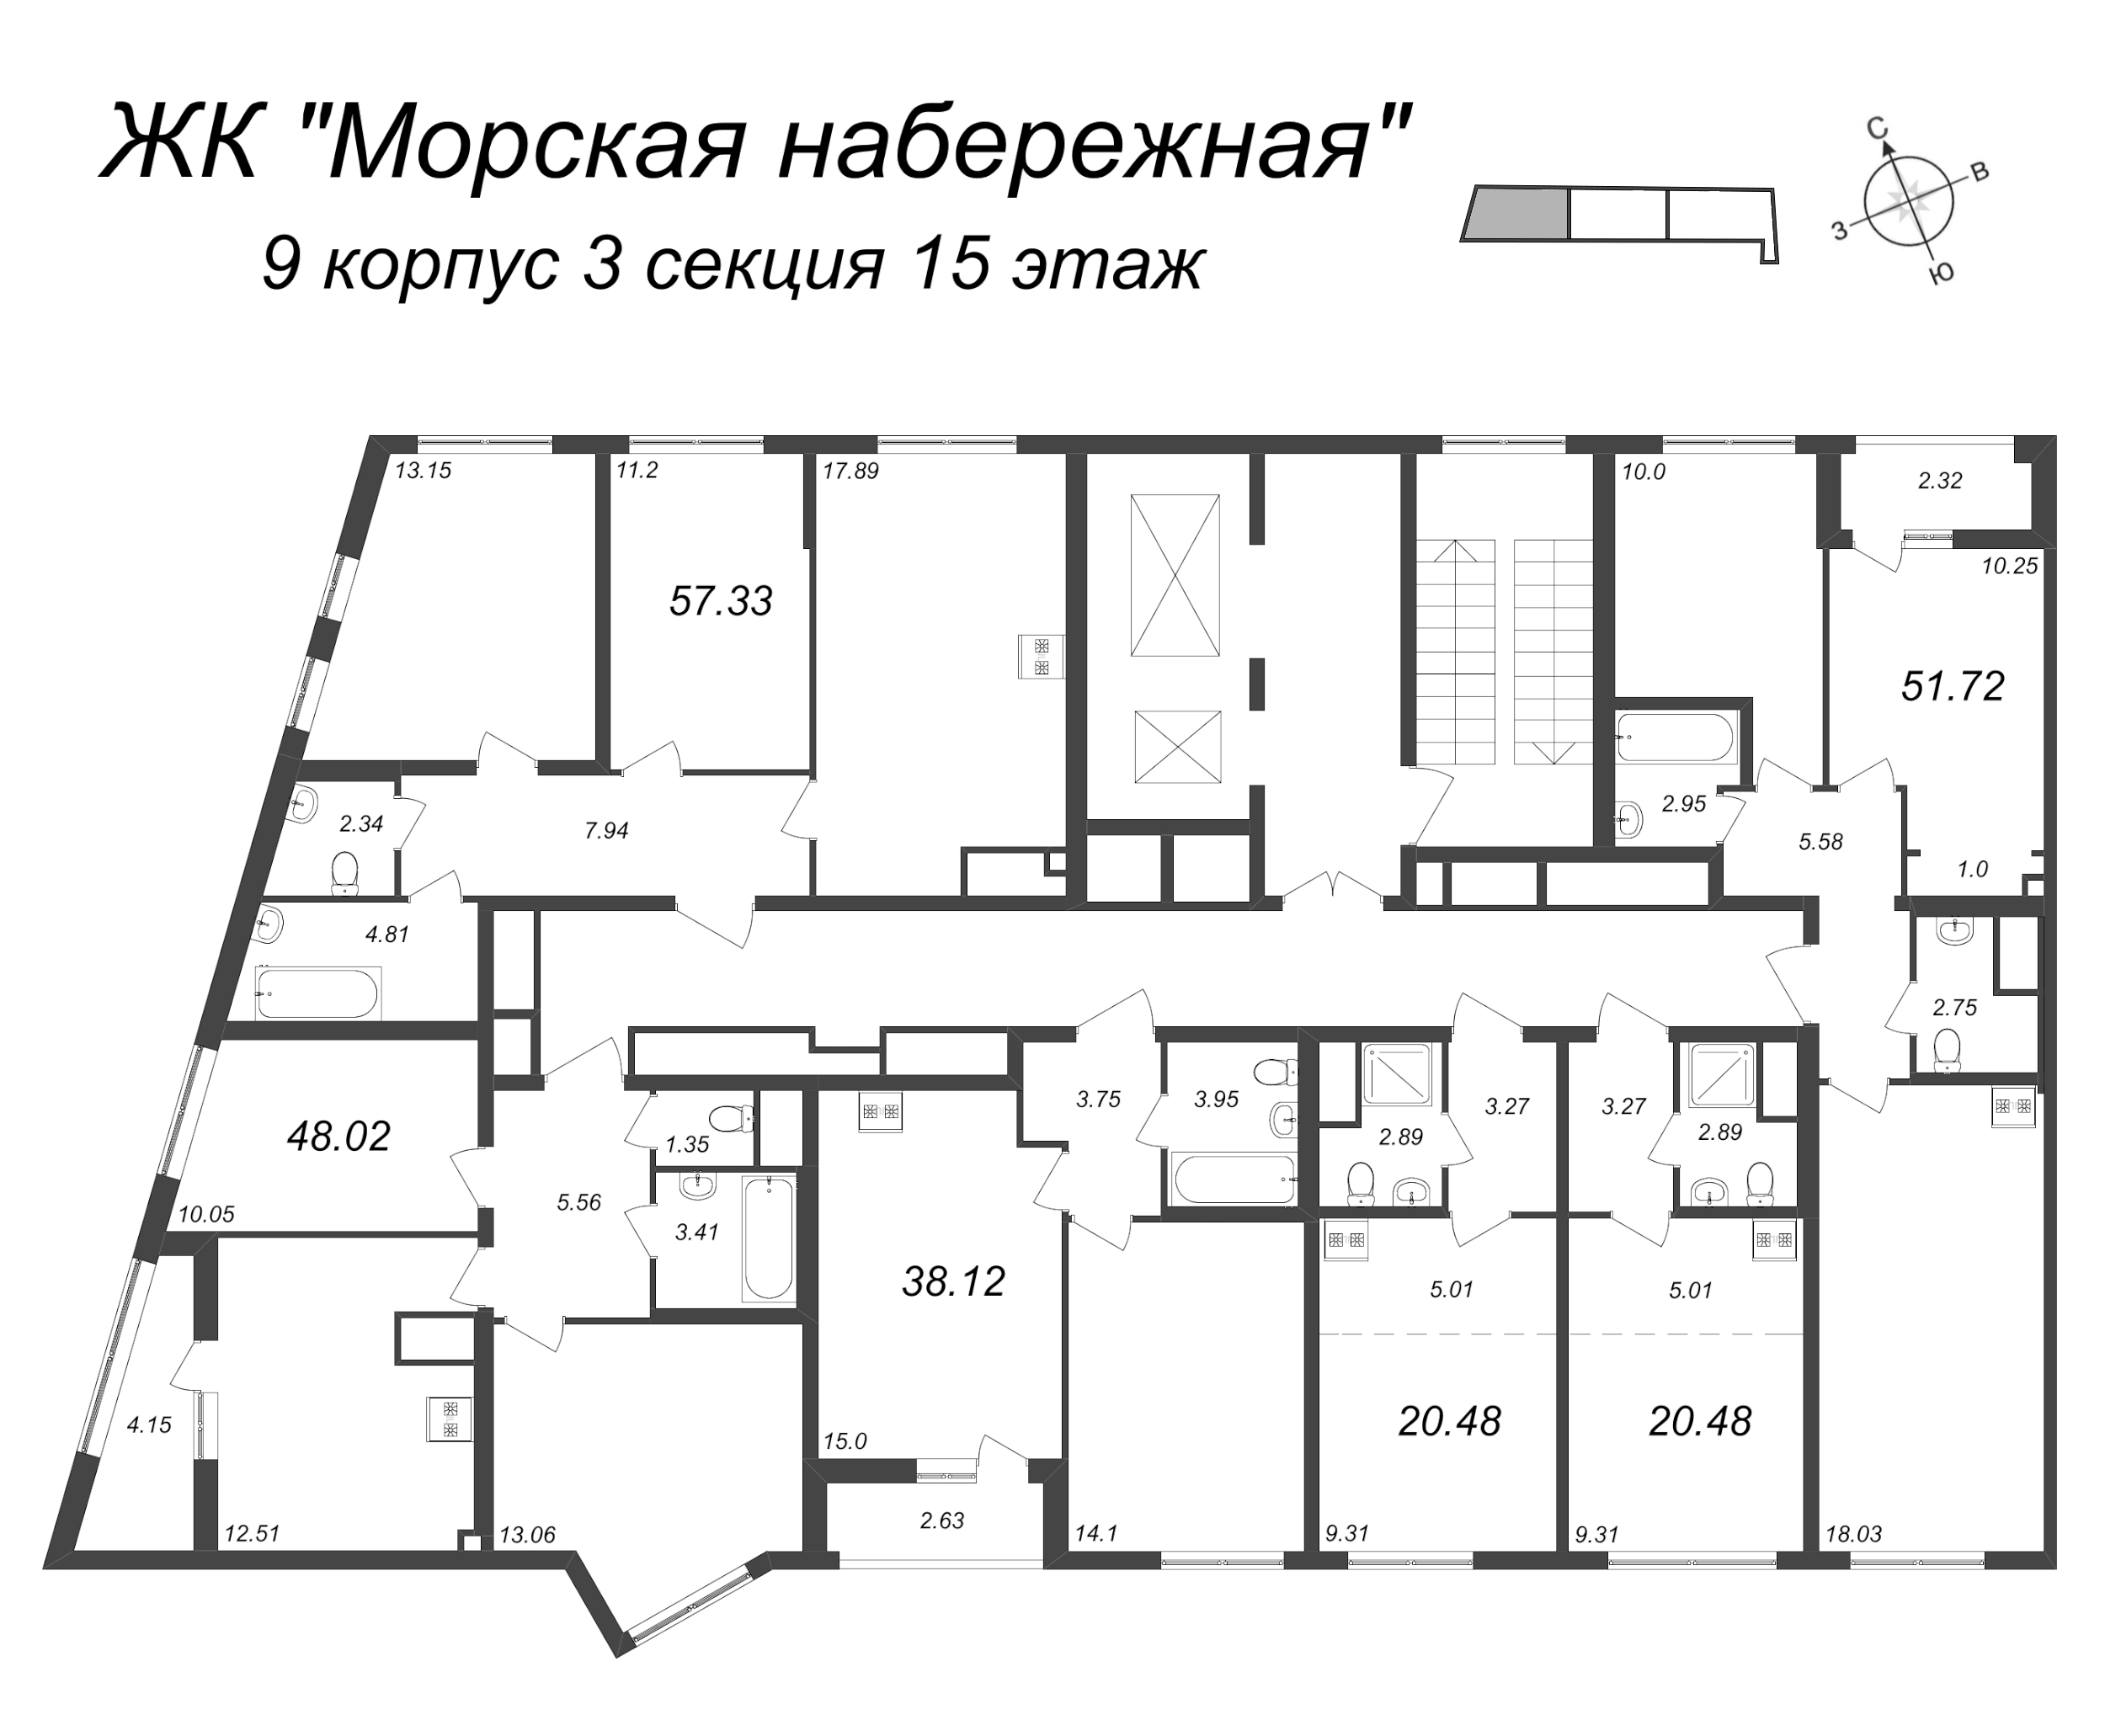 2-комнатная (Евро) квартира, 38.12 м² - планировка этажа